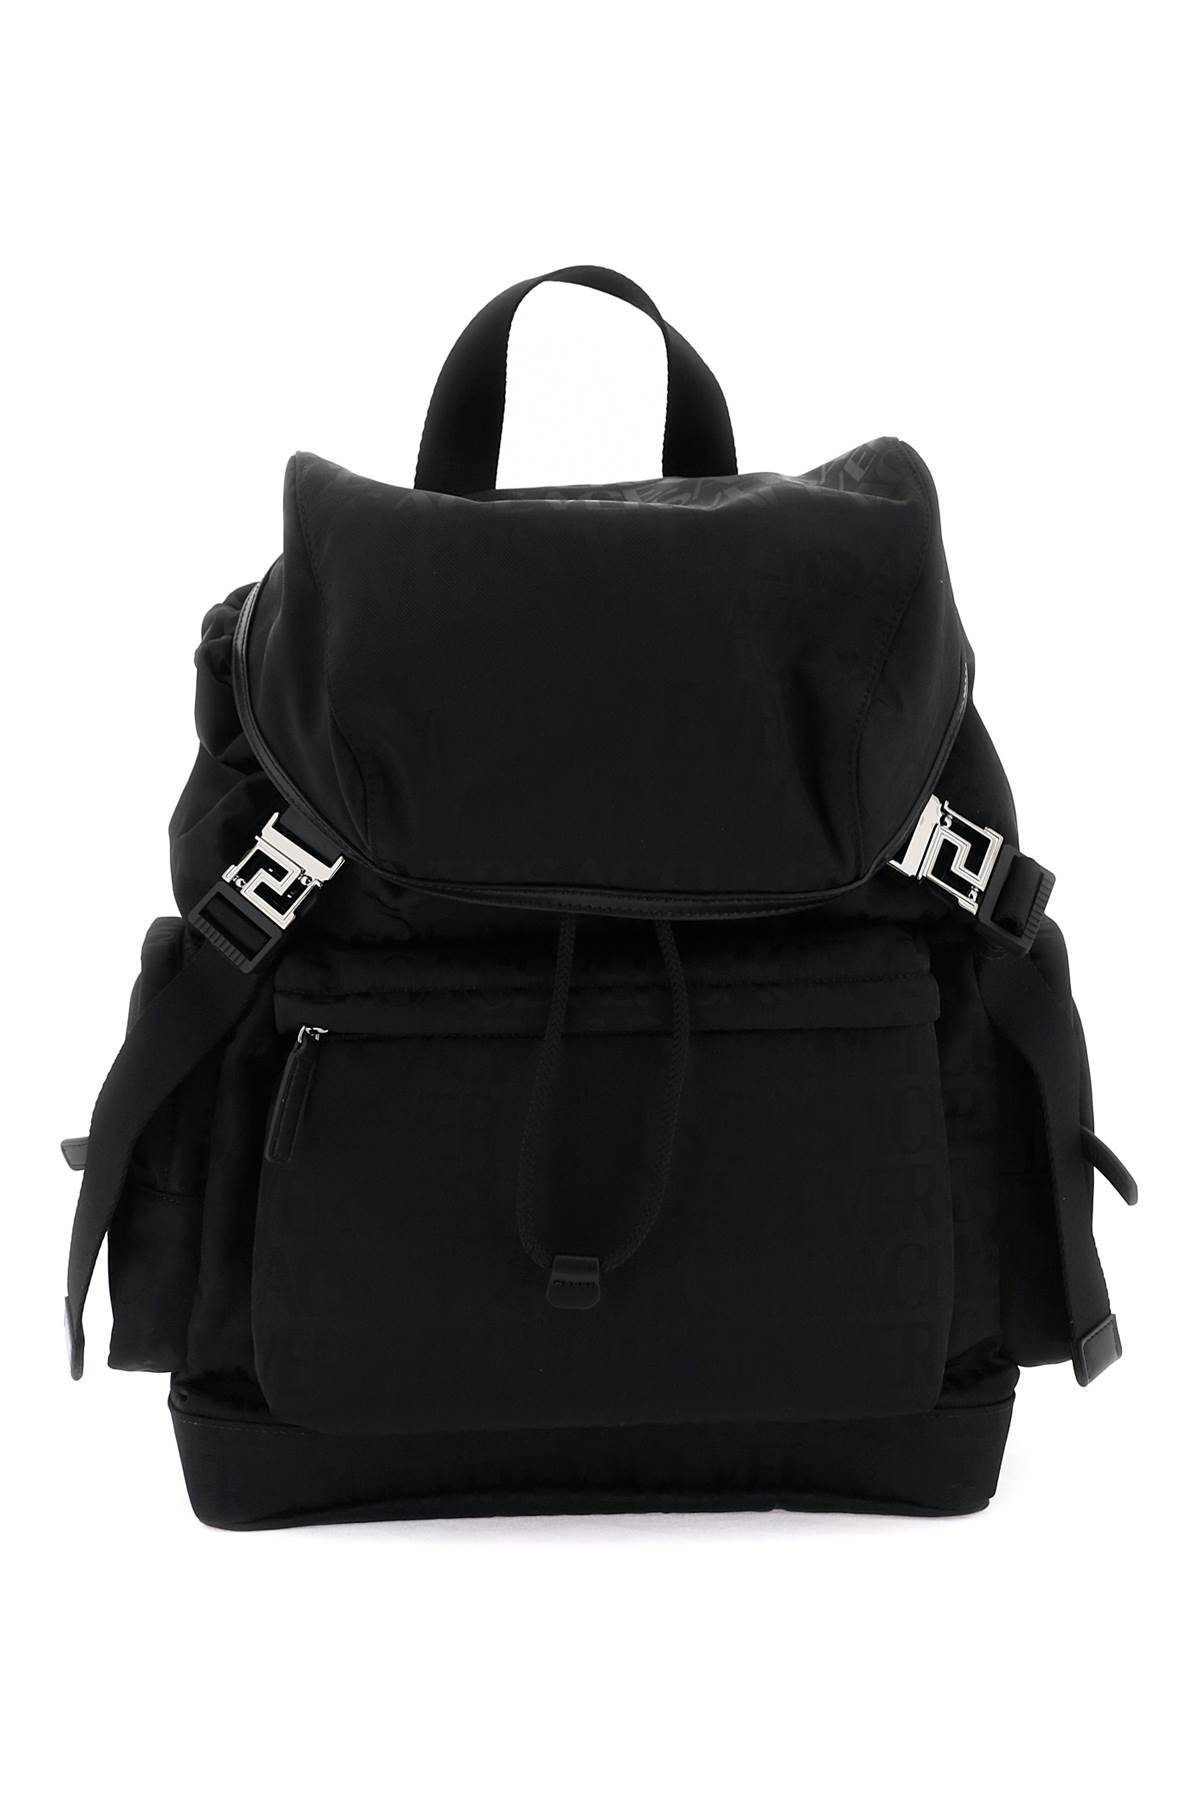 Versace VERSACE versace allover neo nylon backpack